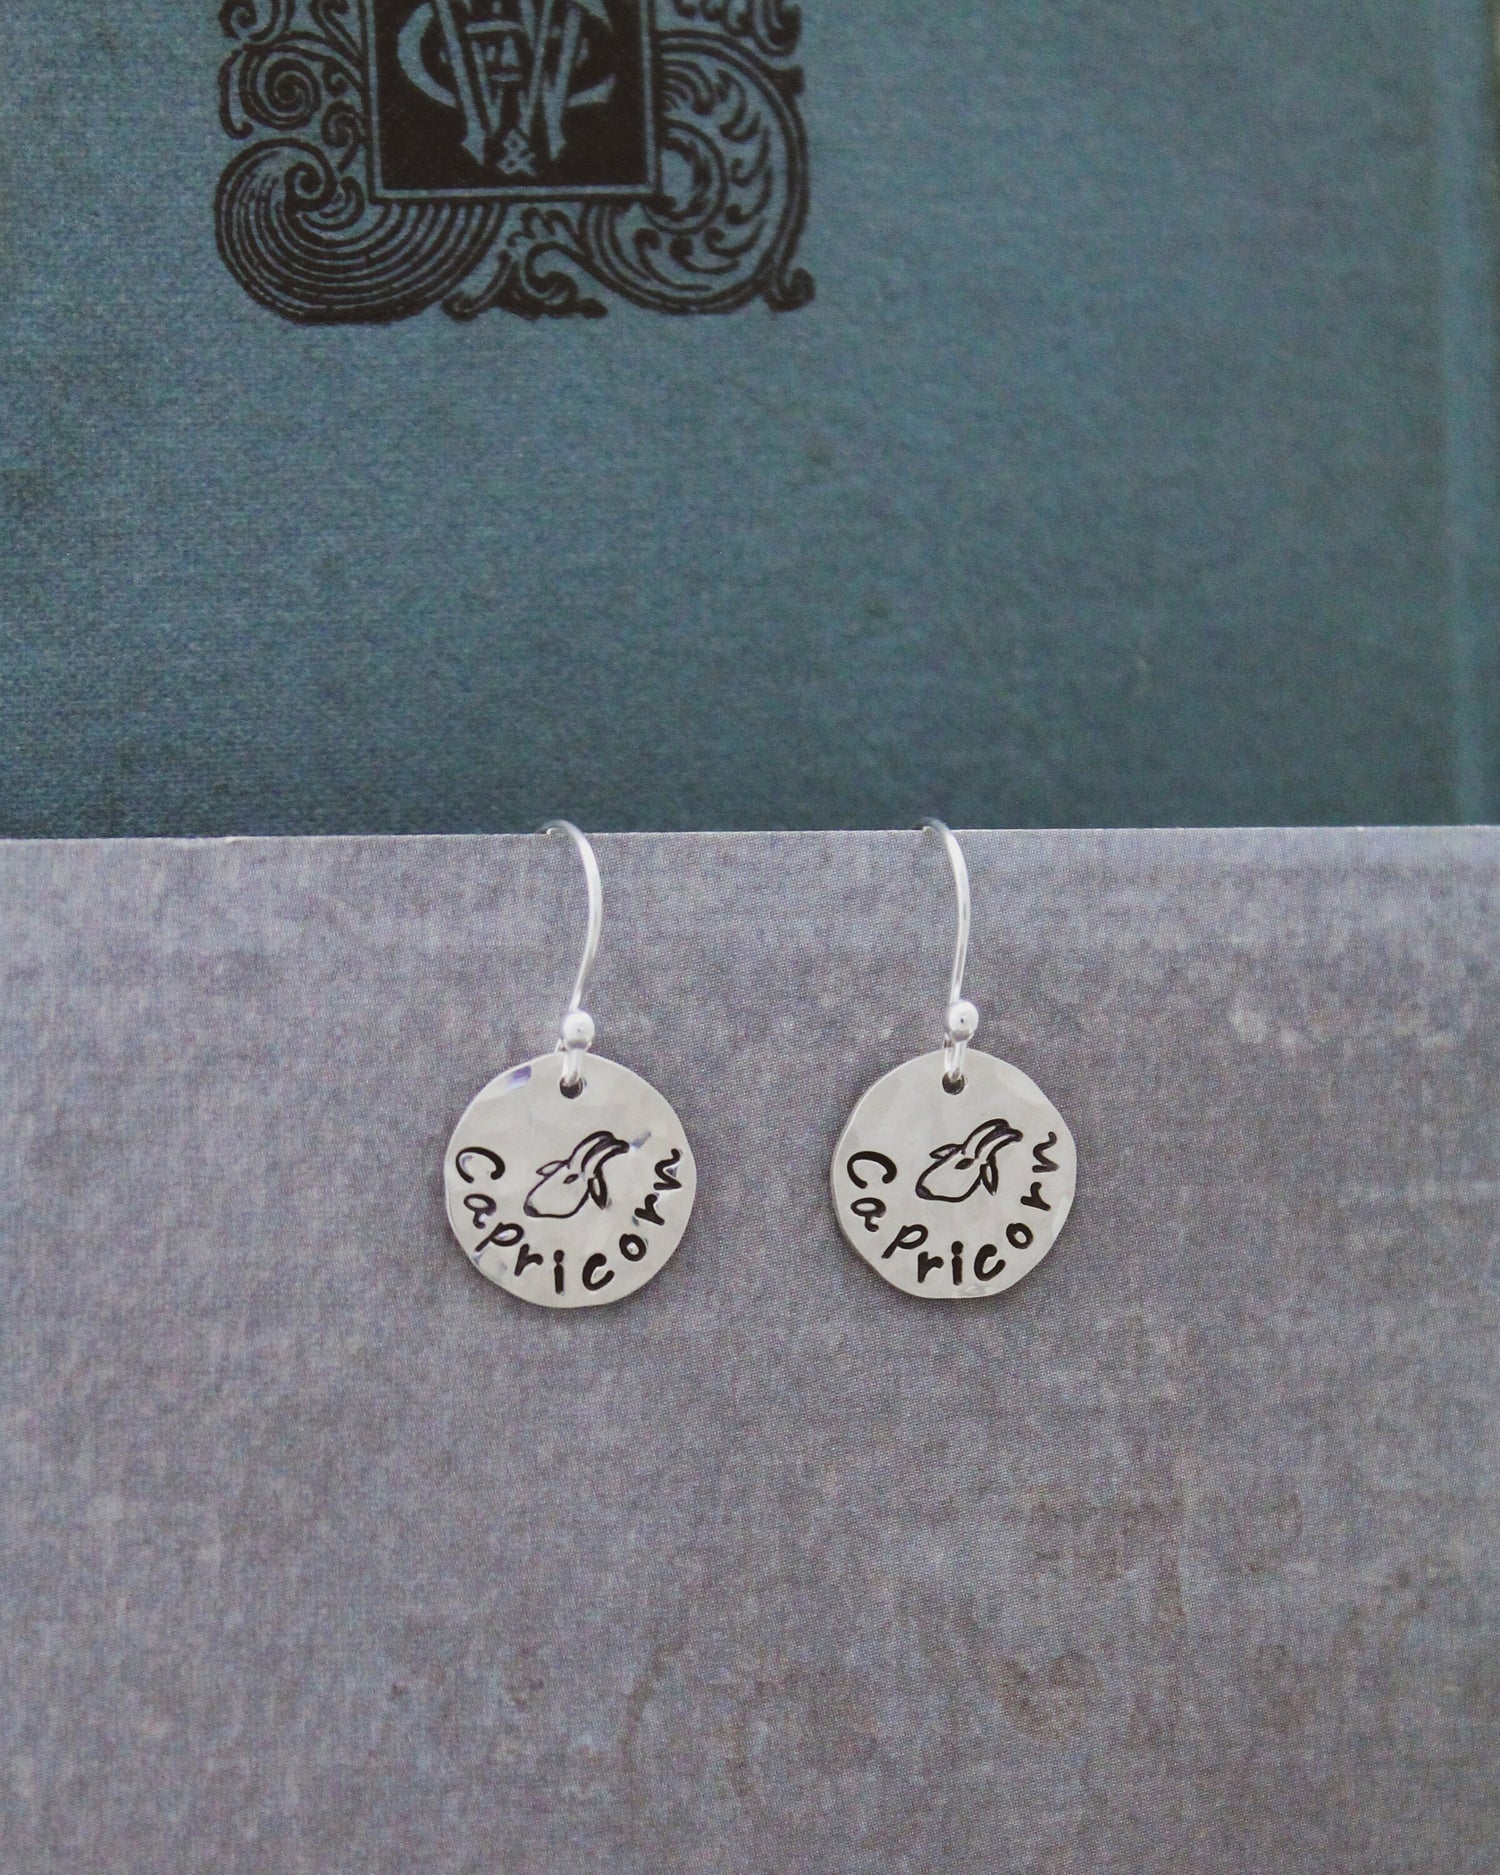 Capricorn Sterling Silver Earrings, Capricorn Zodiac Sign Jewelry, Personalized Earrings, Capricorn Horoscope Zodiac Jewelry Unique Gift Her